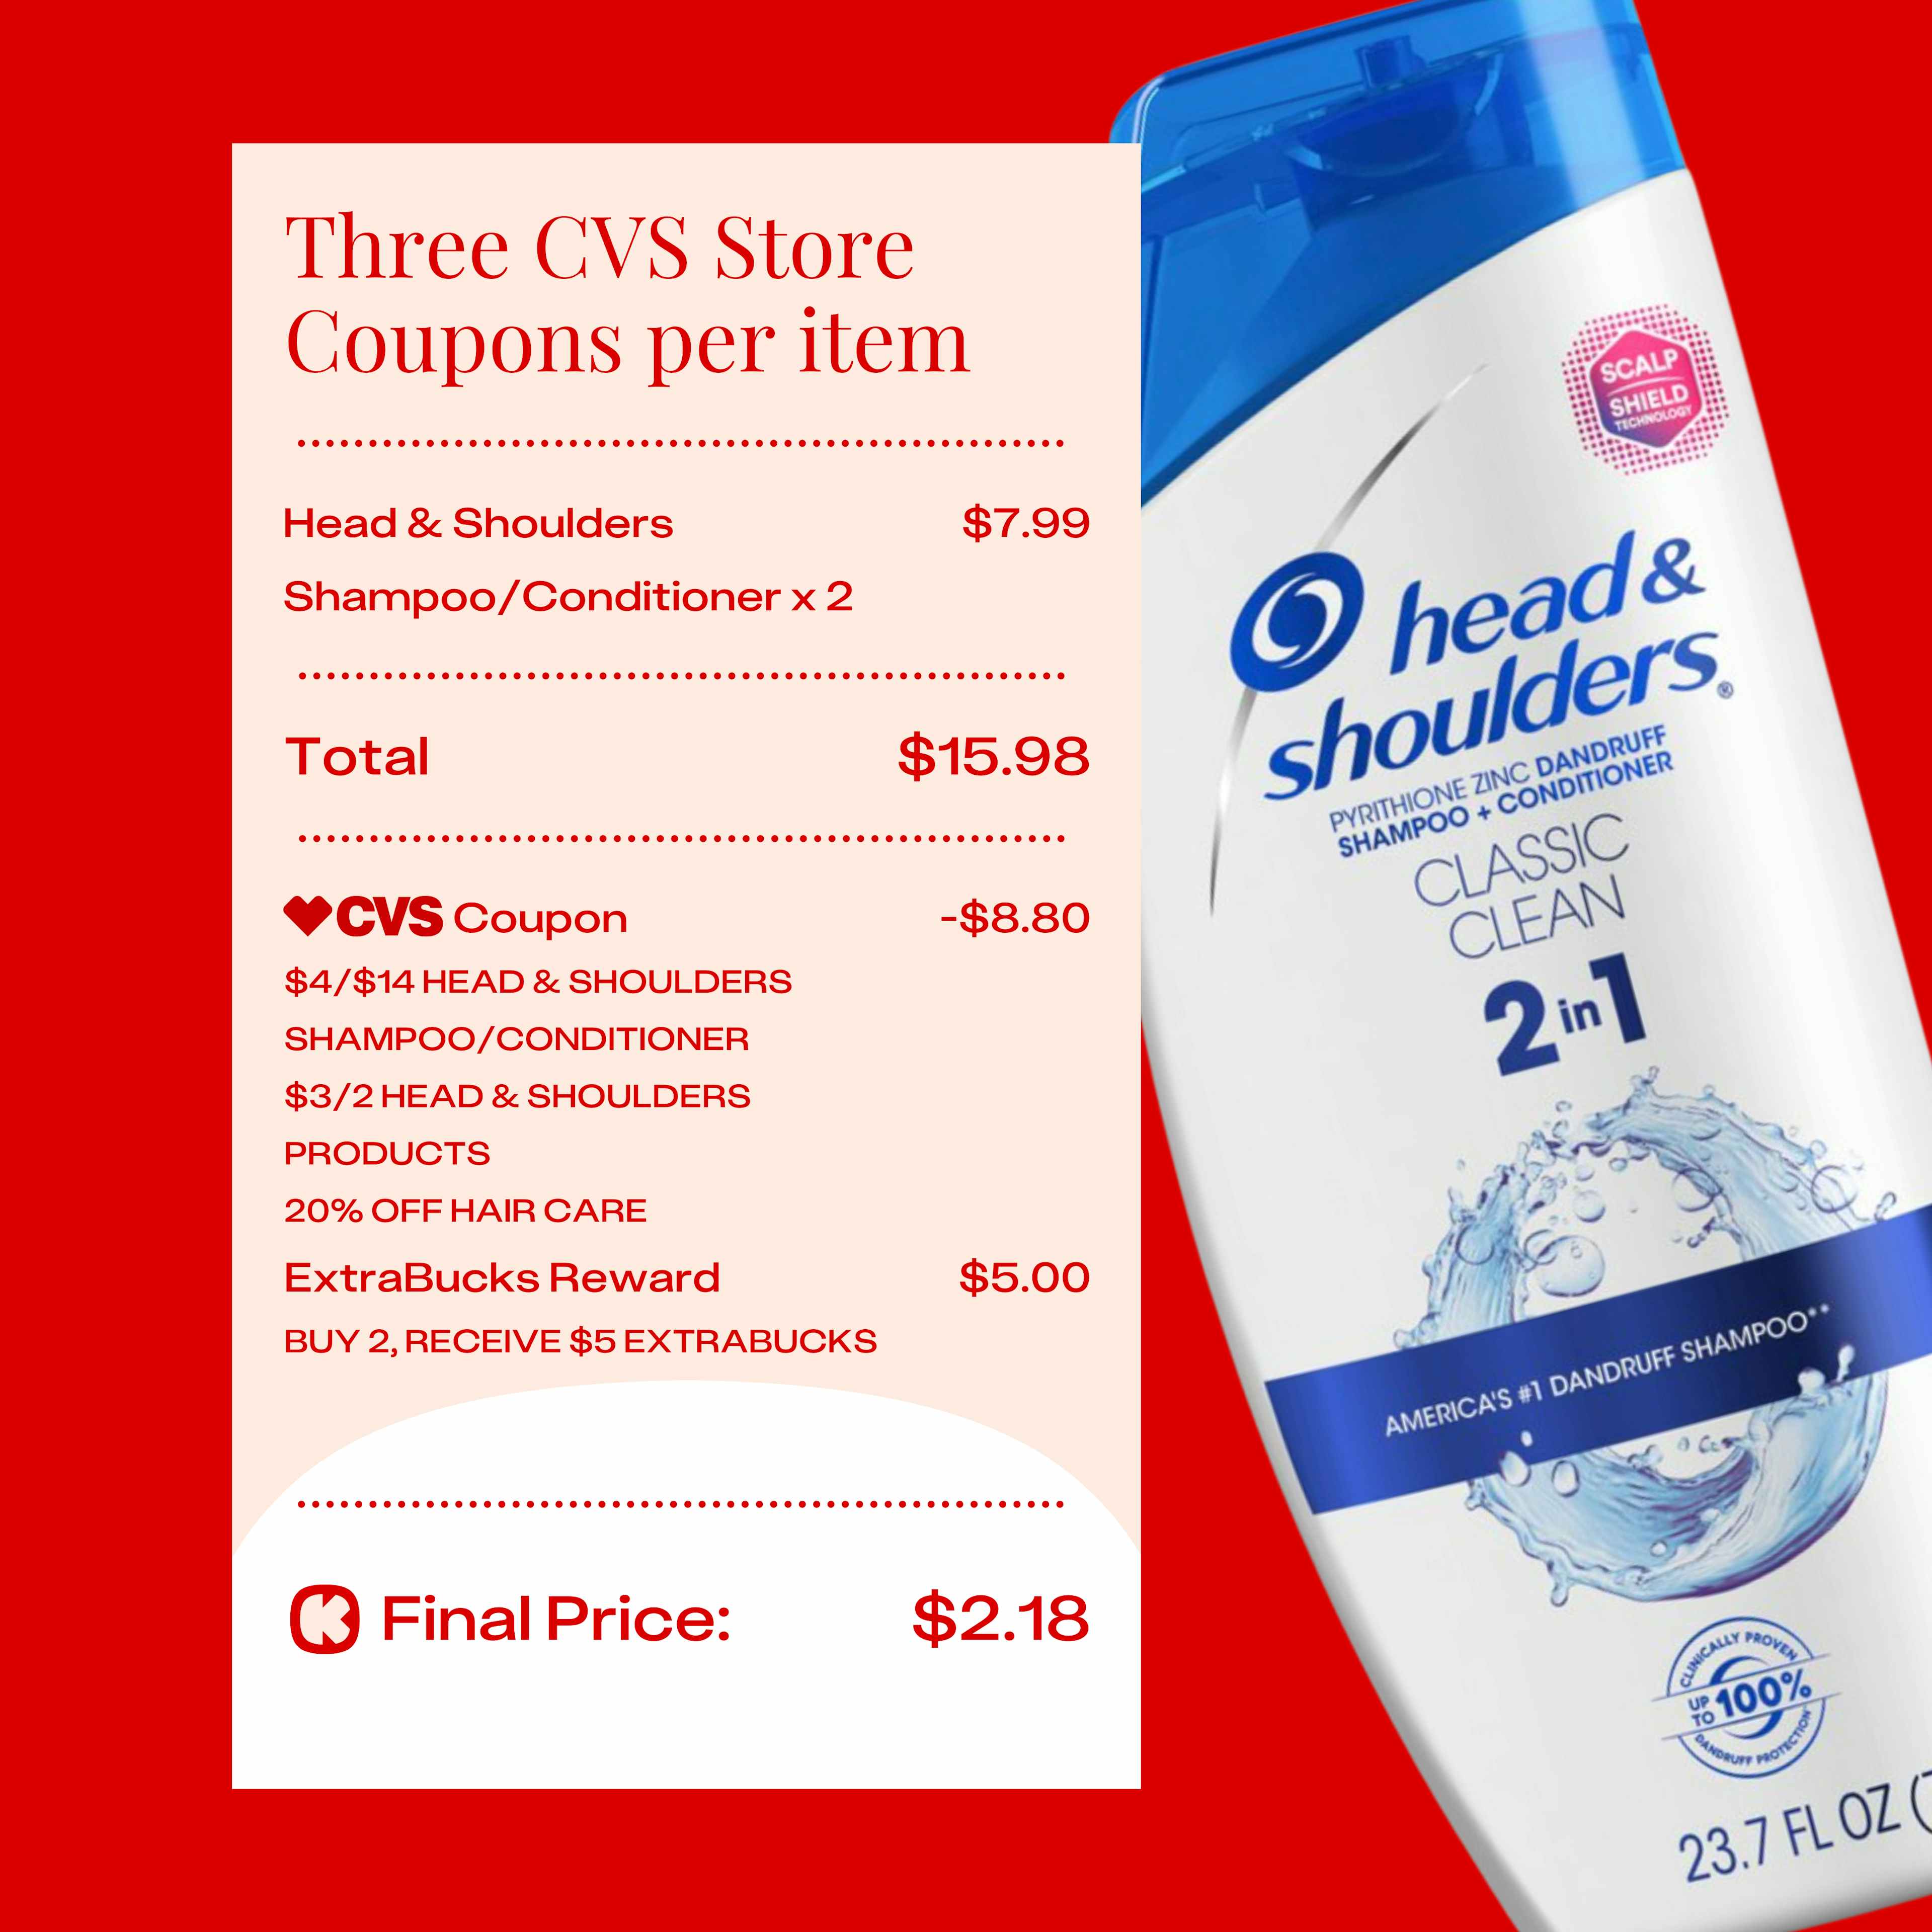 cvs-coupon-stacking-three-store-coupons-per-item